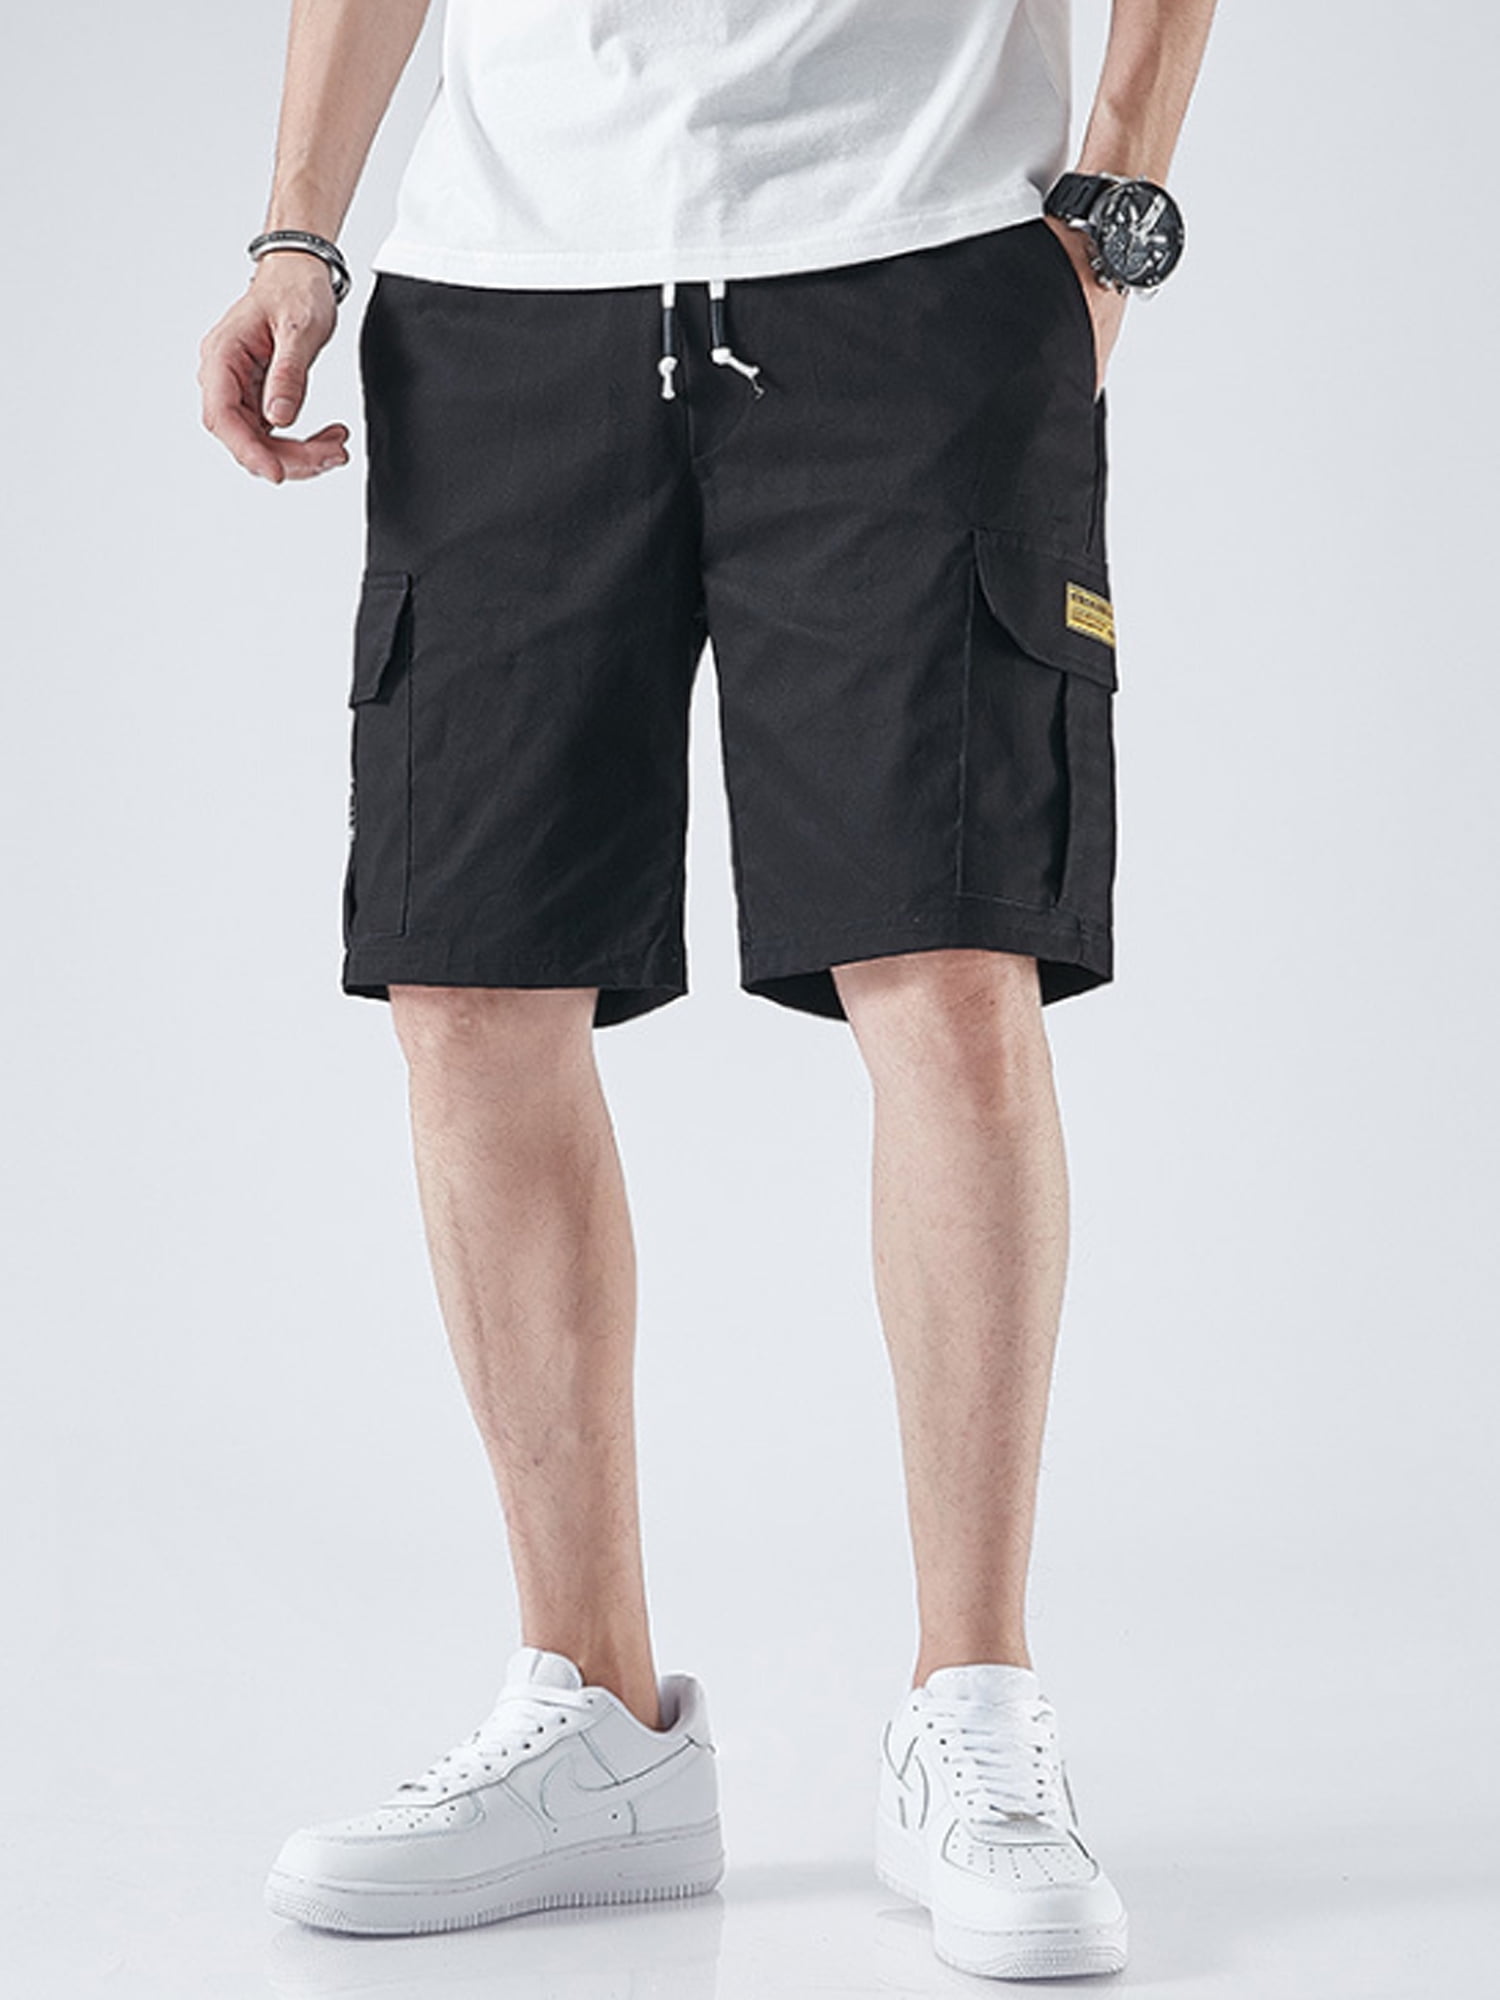 Mens Summer Shorts Casual Plus Size 3D Printed Beach Pants